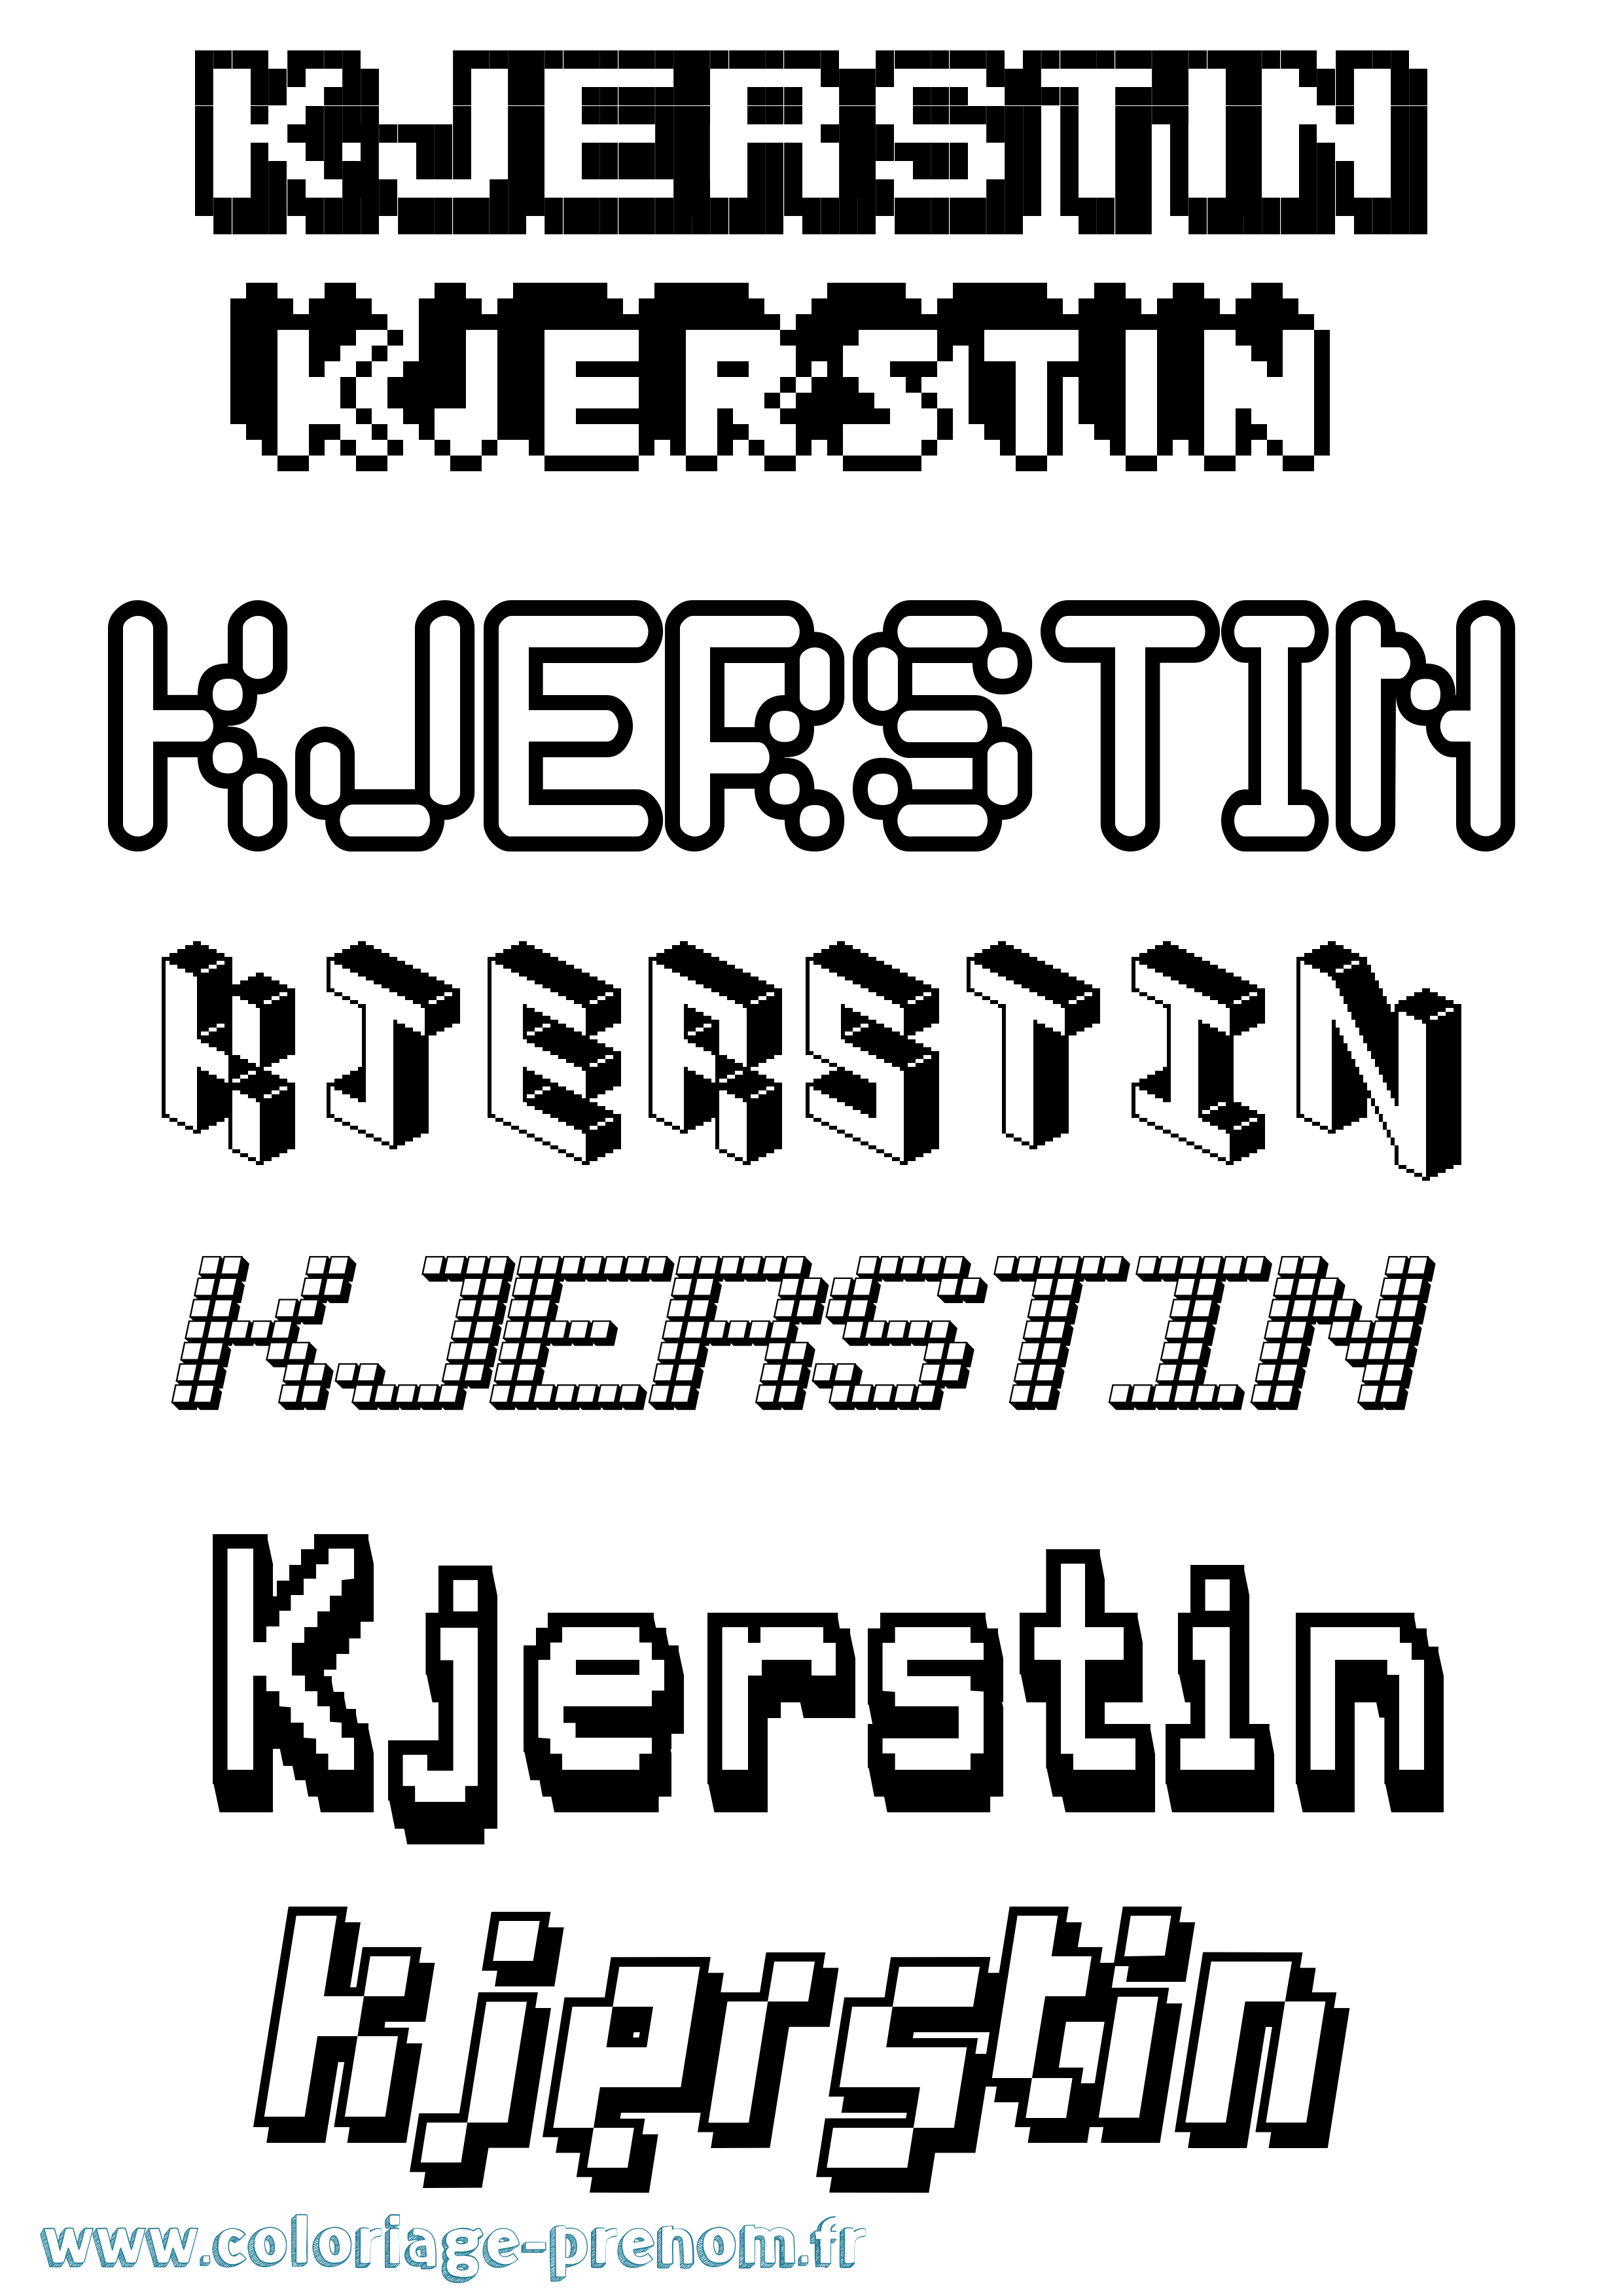 Coloriage prénom Kjerstin Pixel